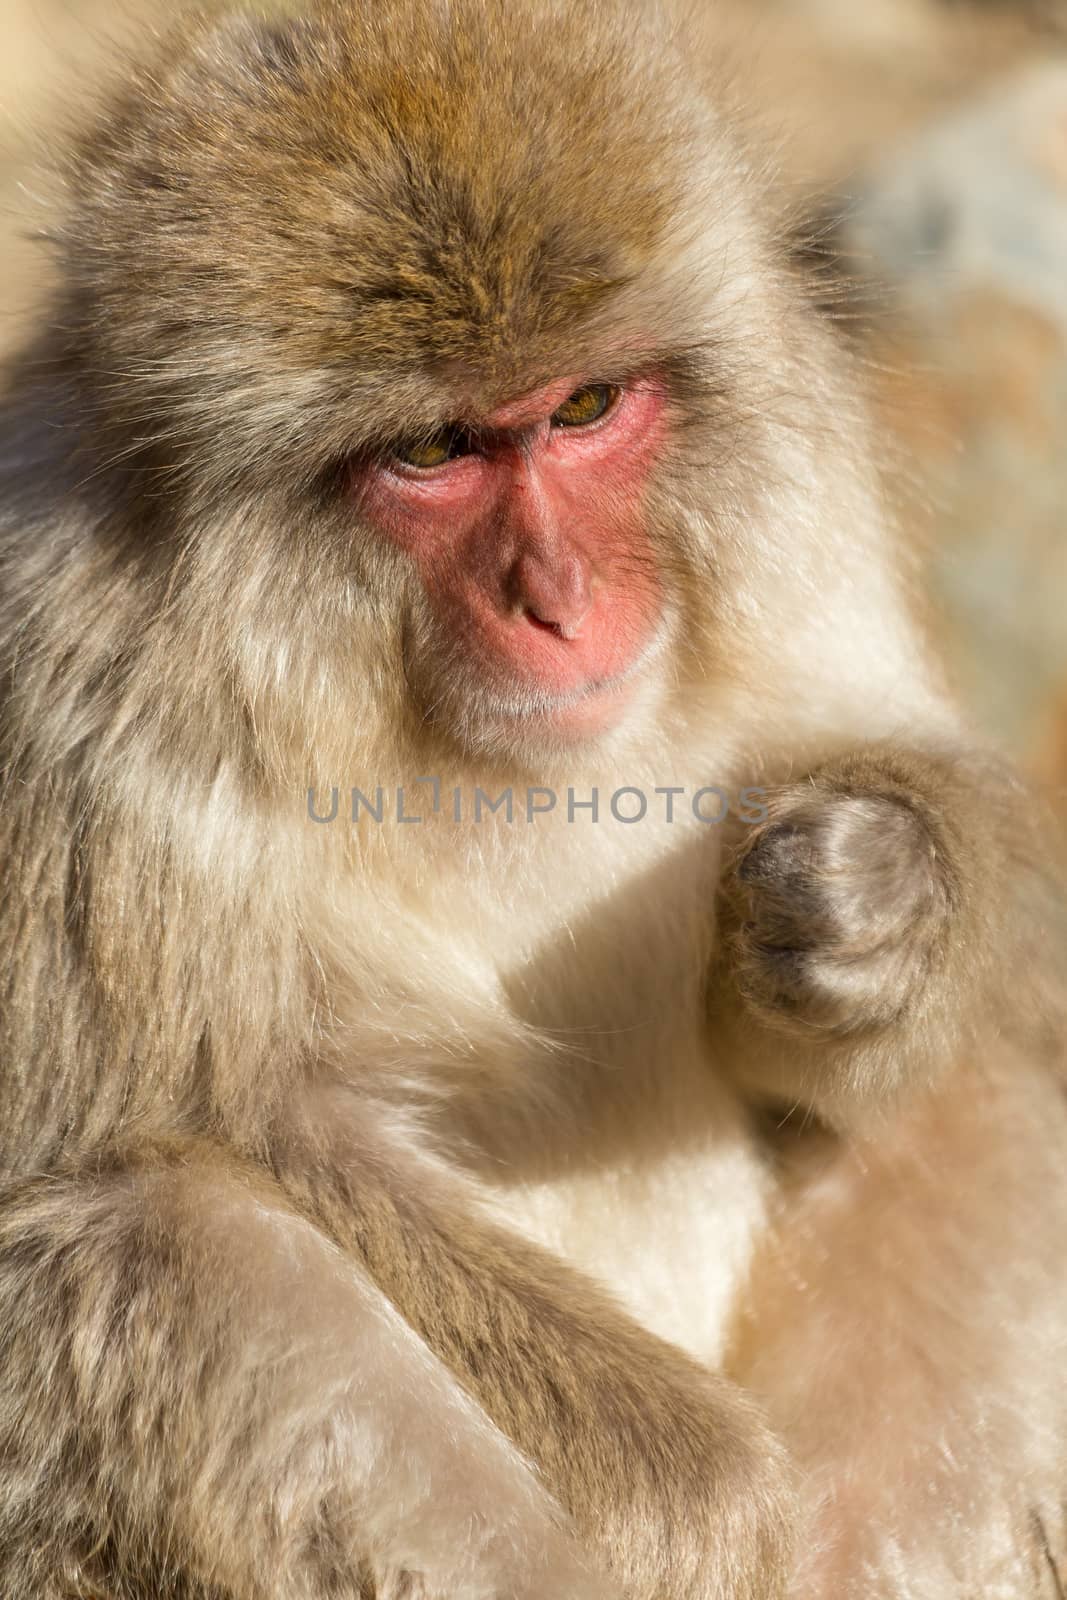 Lovely monkey by leungchopan